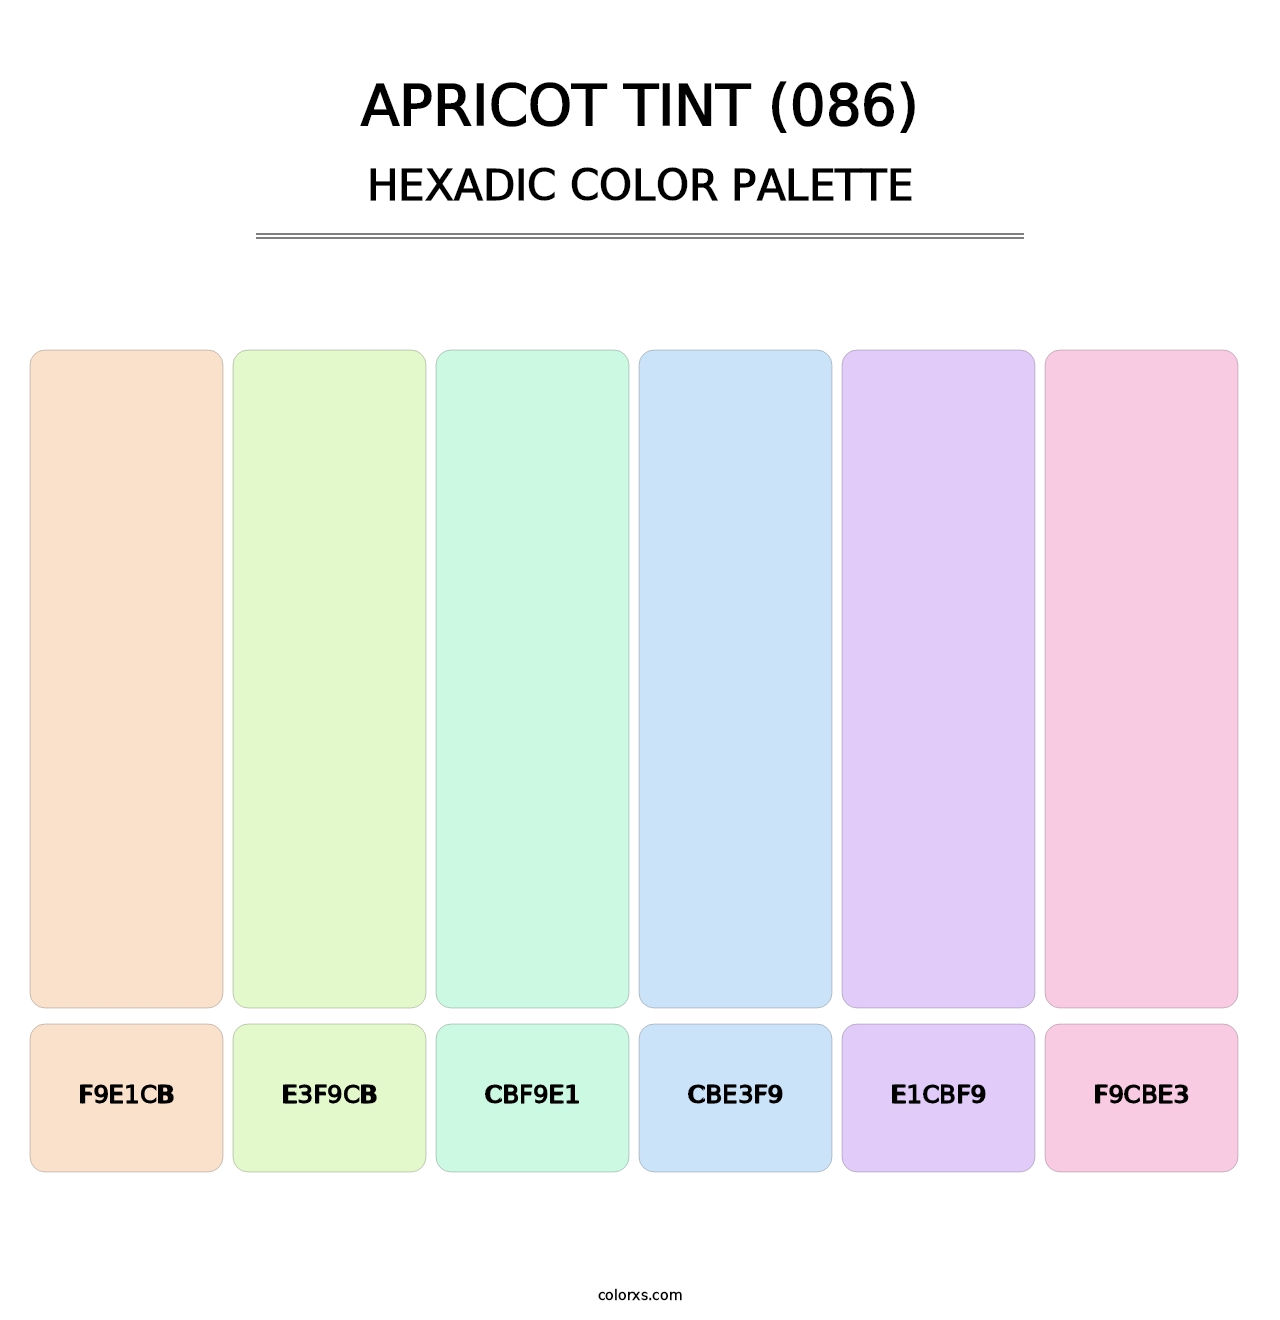 Apricot Tint (086) - Hexadic Color Palette